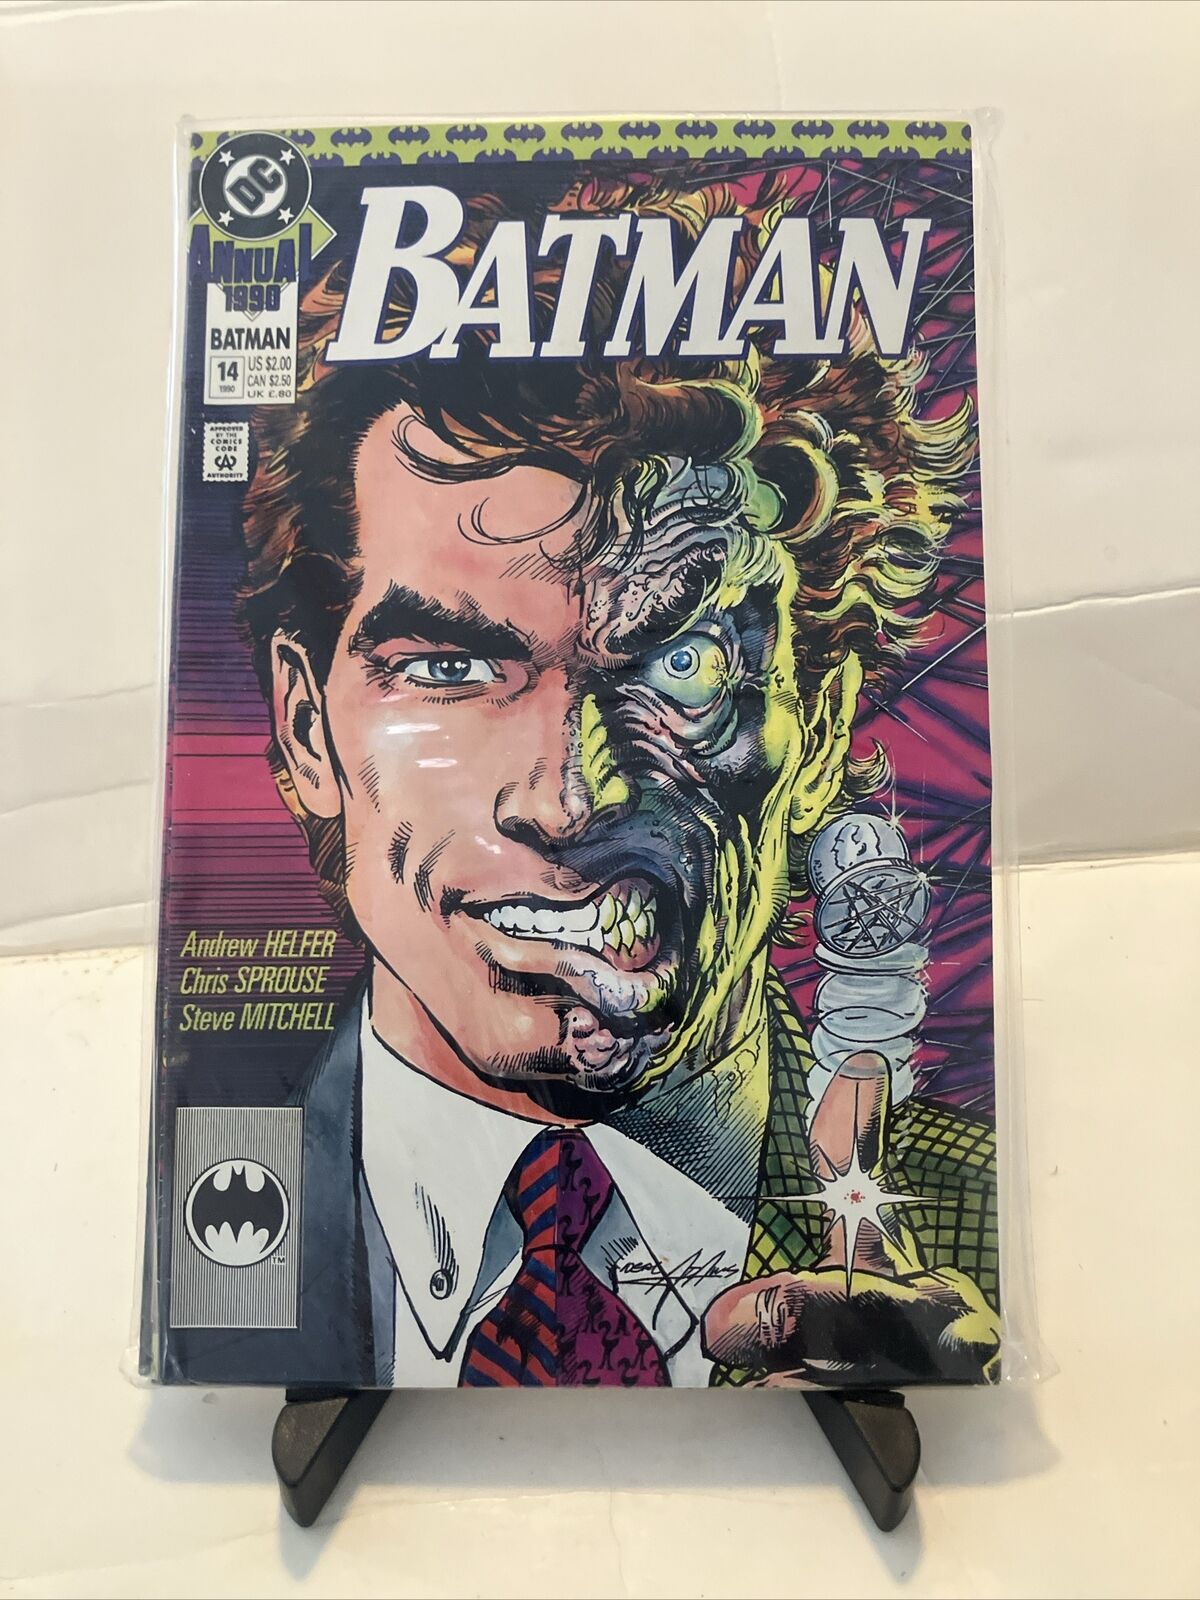 Batman Annual #14 (DC Comics, July 1990)